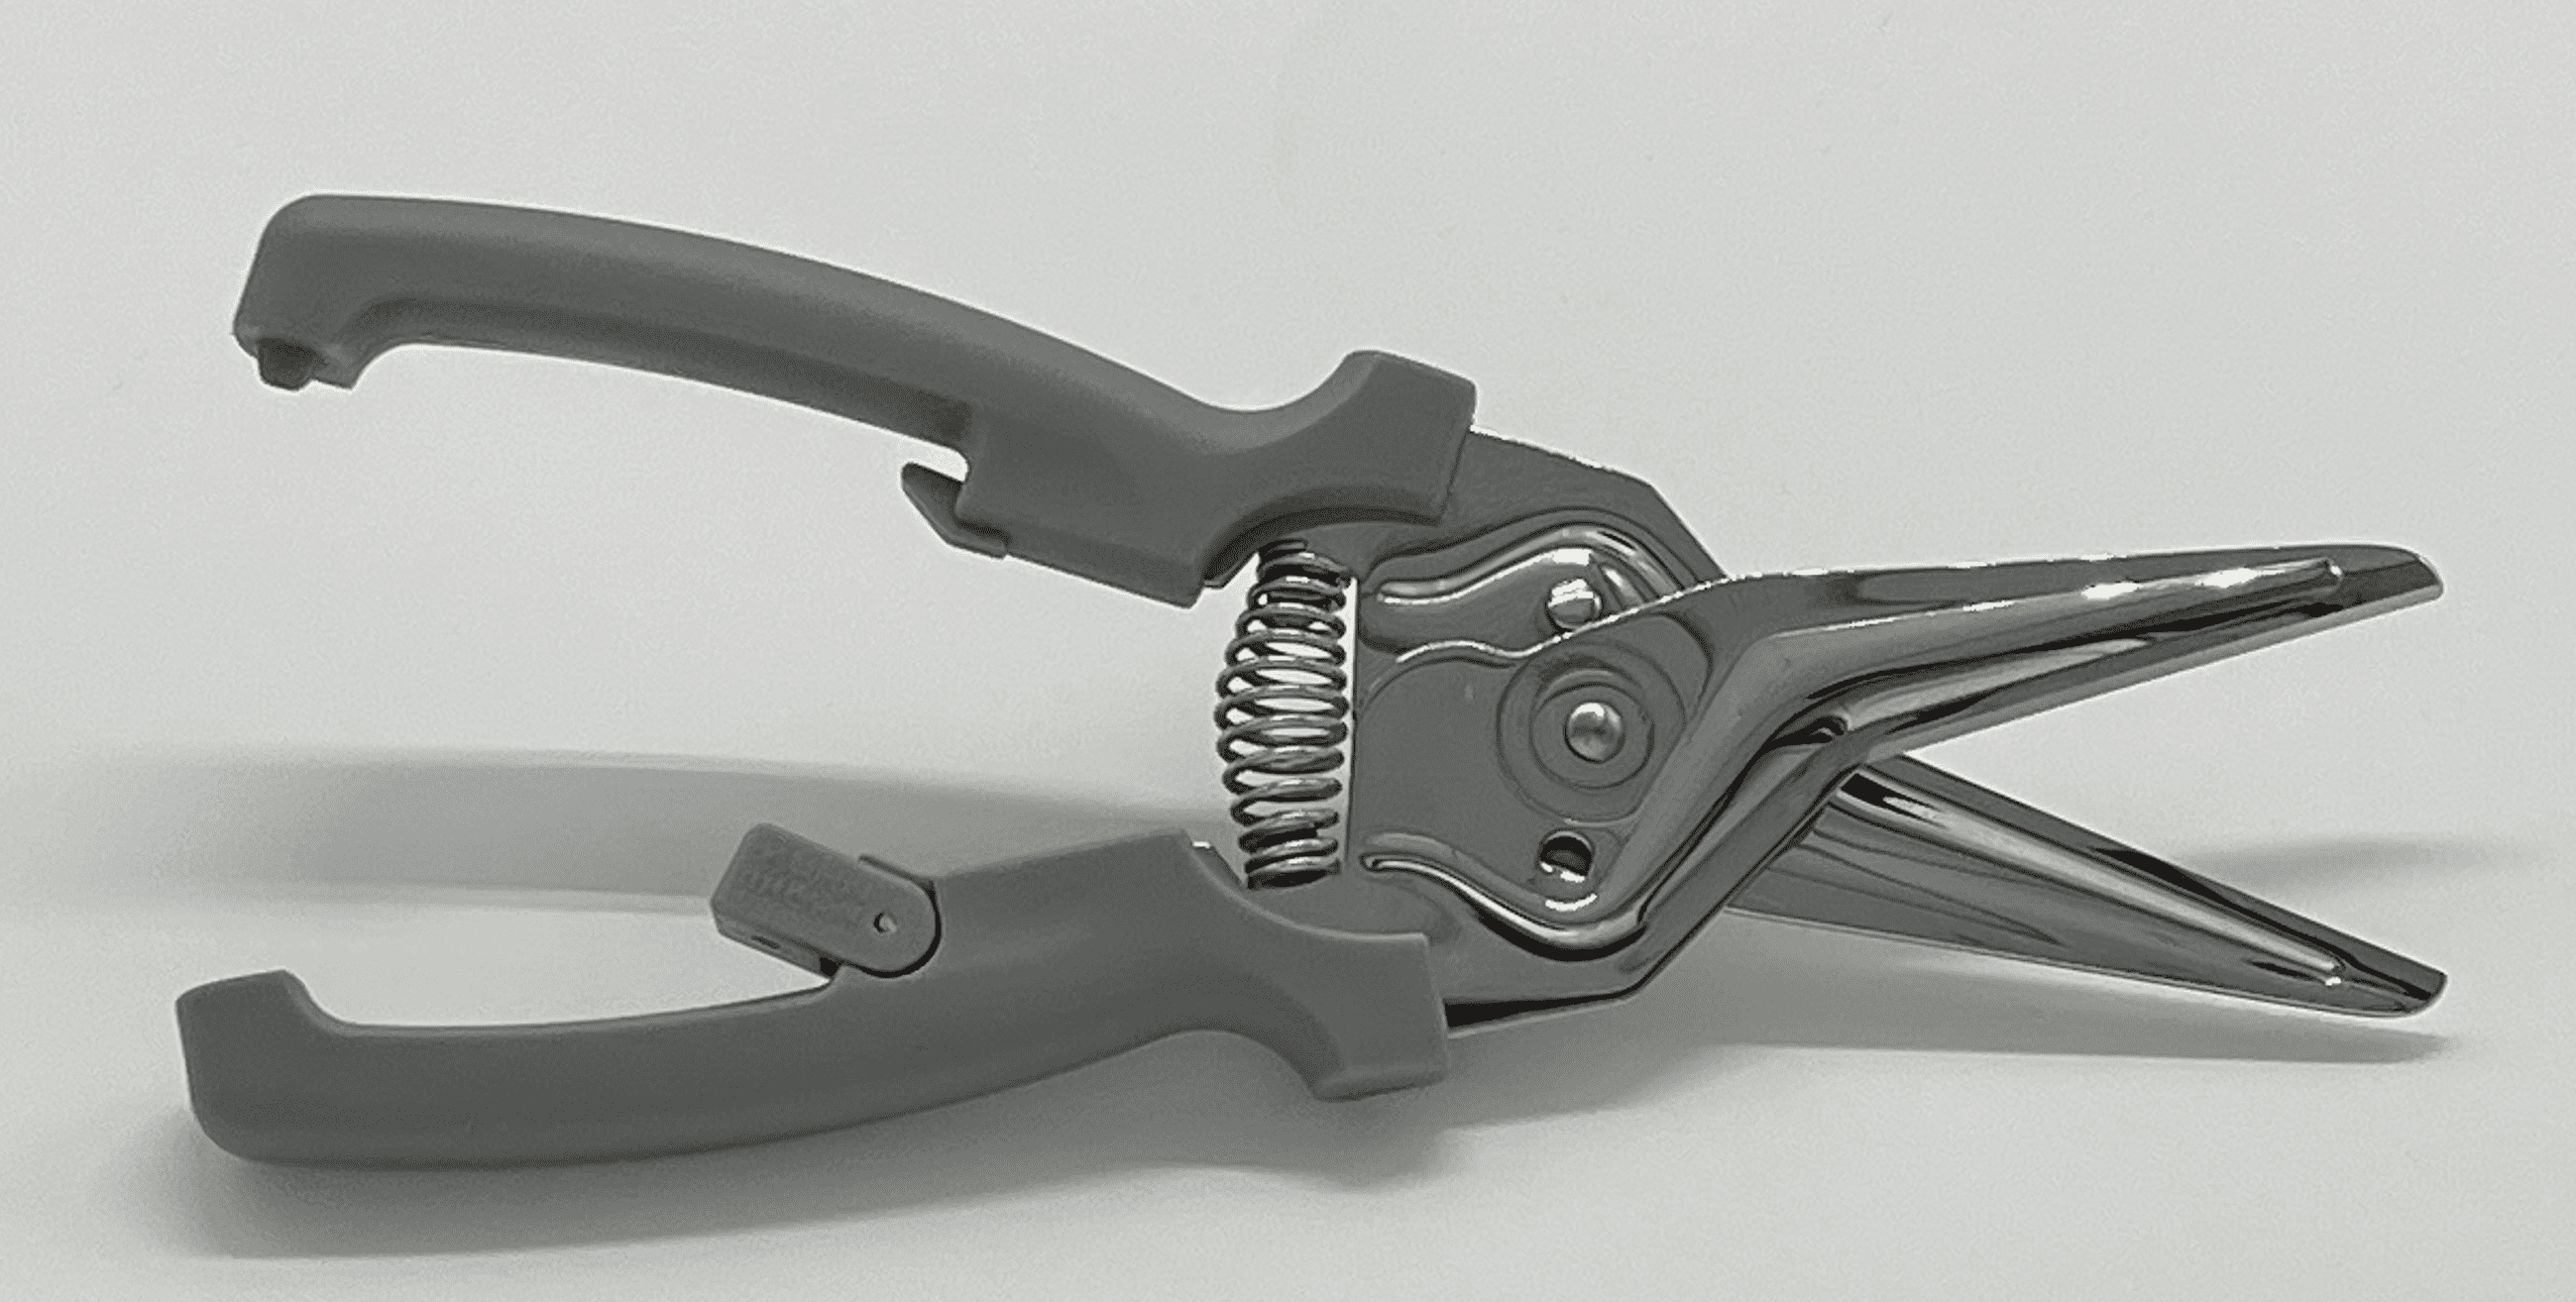 Kuhn Rikon Set of 2 3-in-1 Shears w/ Easy Grip Handle Model K45657 Used